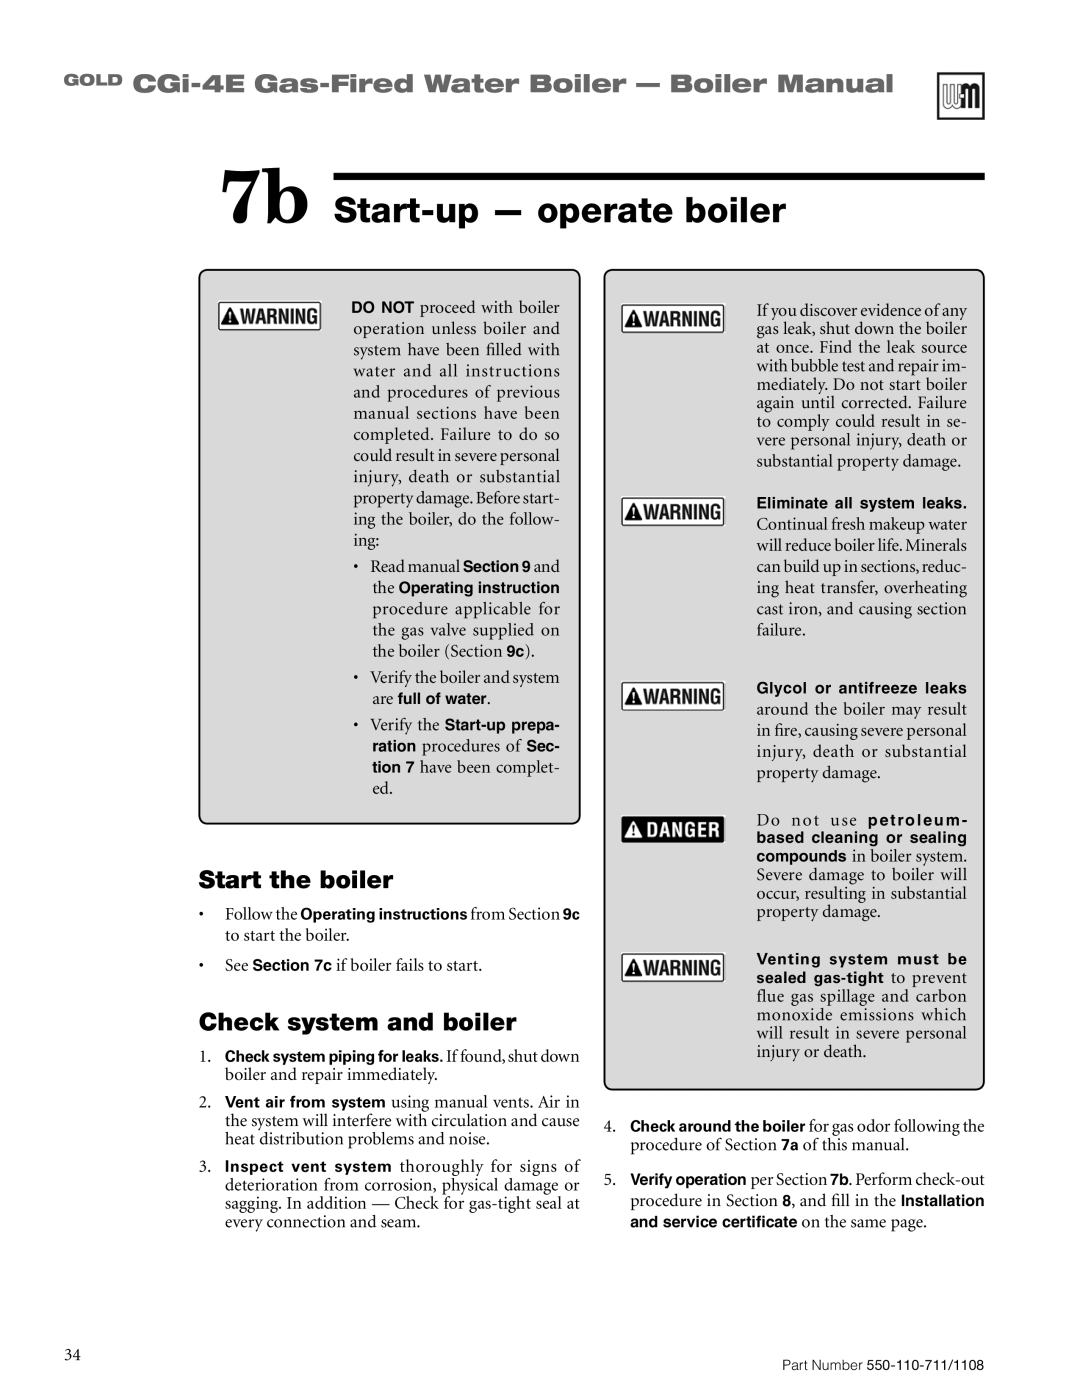 Weil-McLain CGI-4E manual 7b Start-up- operate boiler, GOLD CGi-4E Gas-FiredWater Boiler - Boiler Manual, Start the boiler 